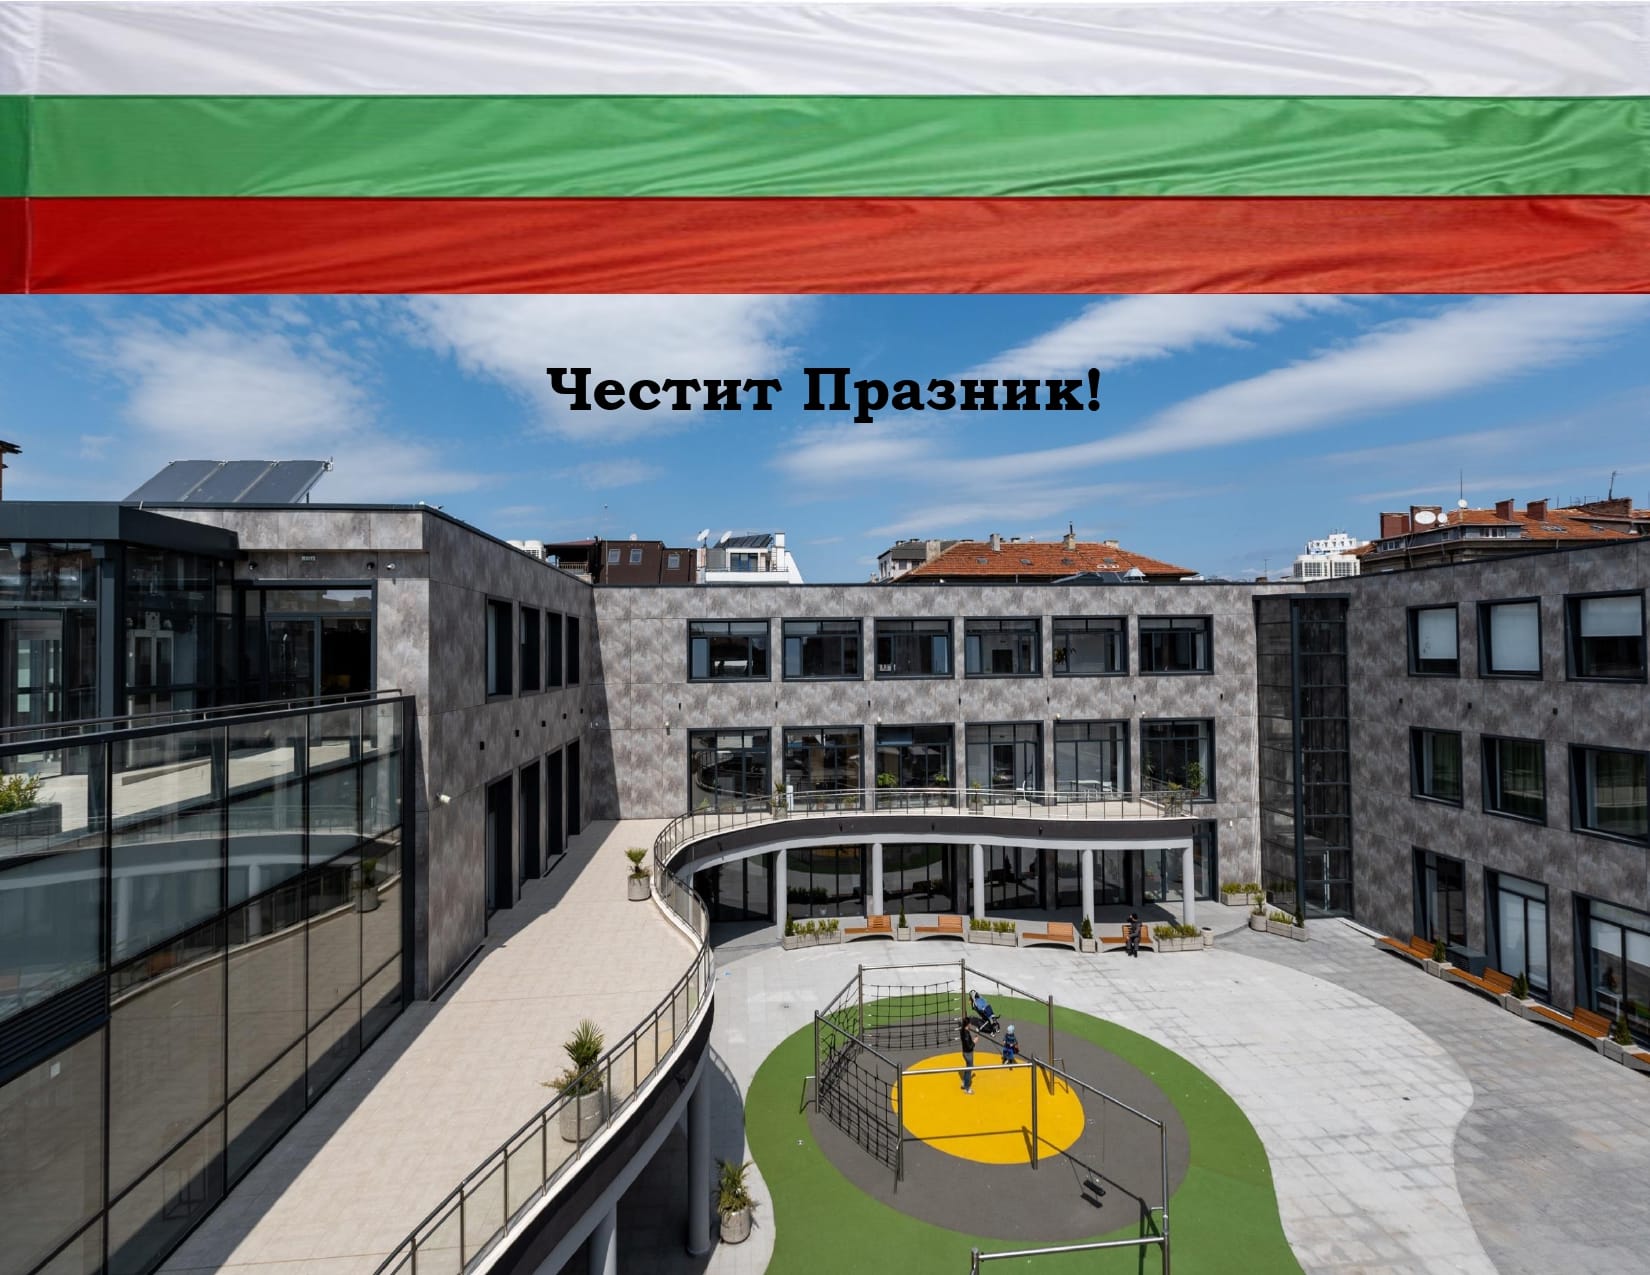 Регионалната библиотека Пейо Яворов“ в Бургас организира специална събития по